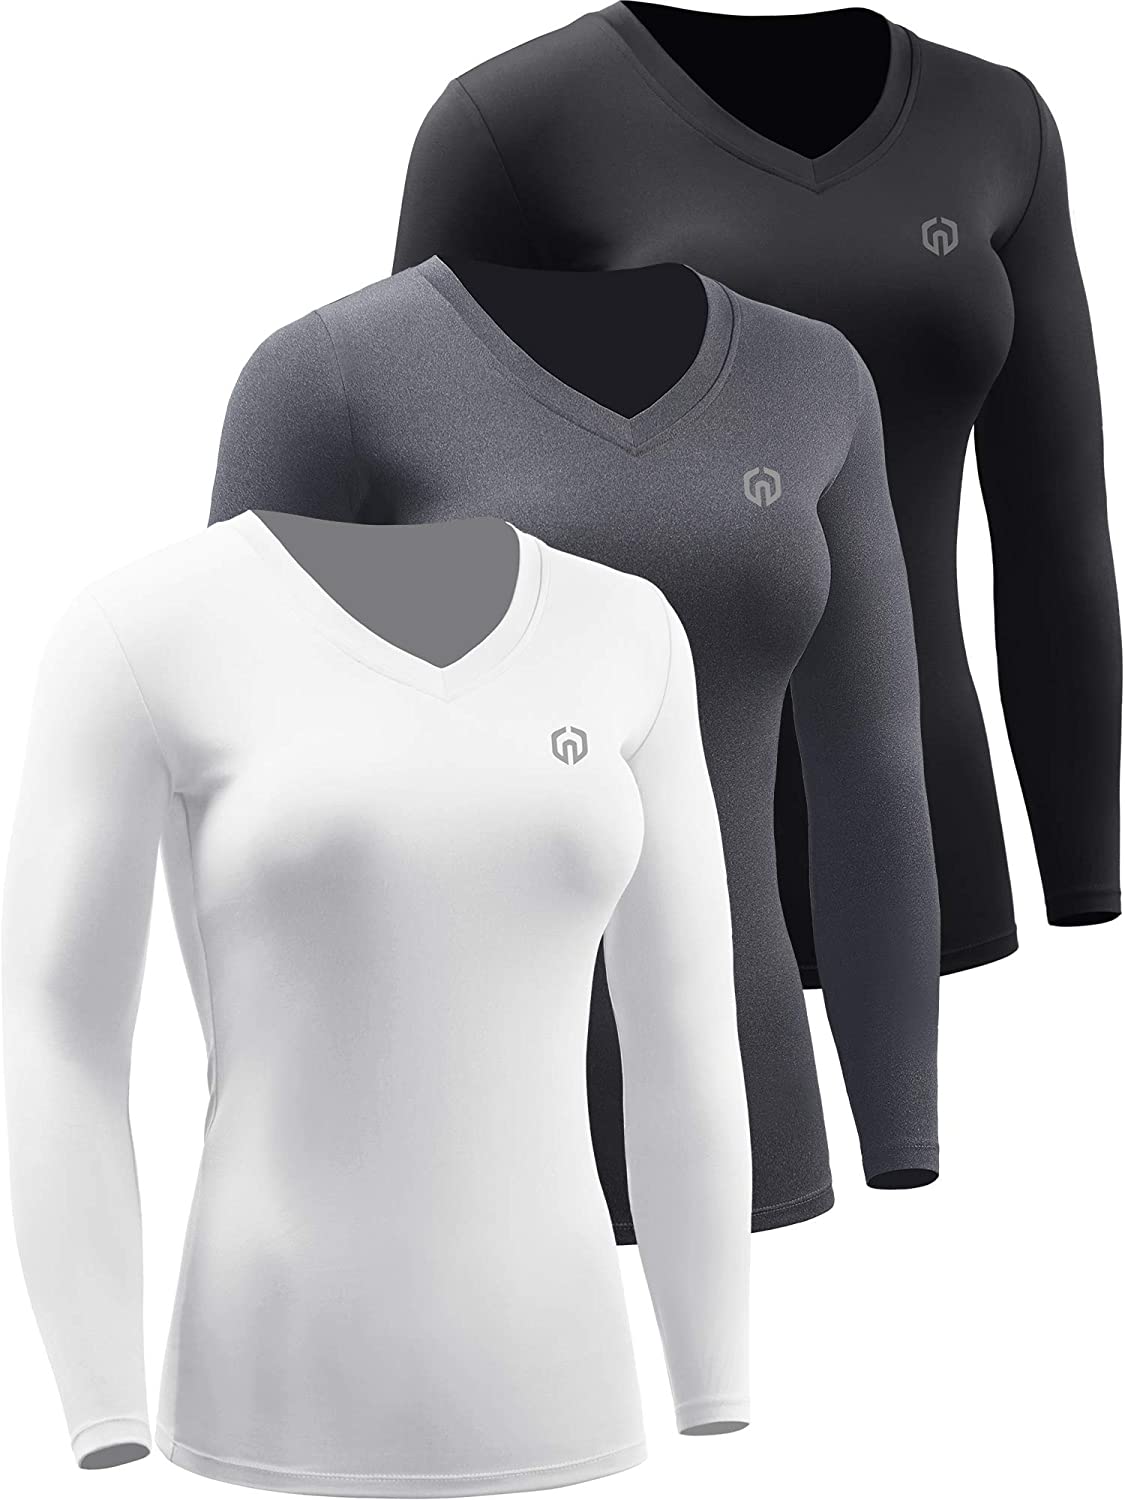 NELEUS Women's 3 Pack Compression Shirts Long Sleeve Yoga Athletic Running T Shirt 